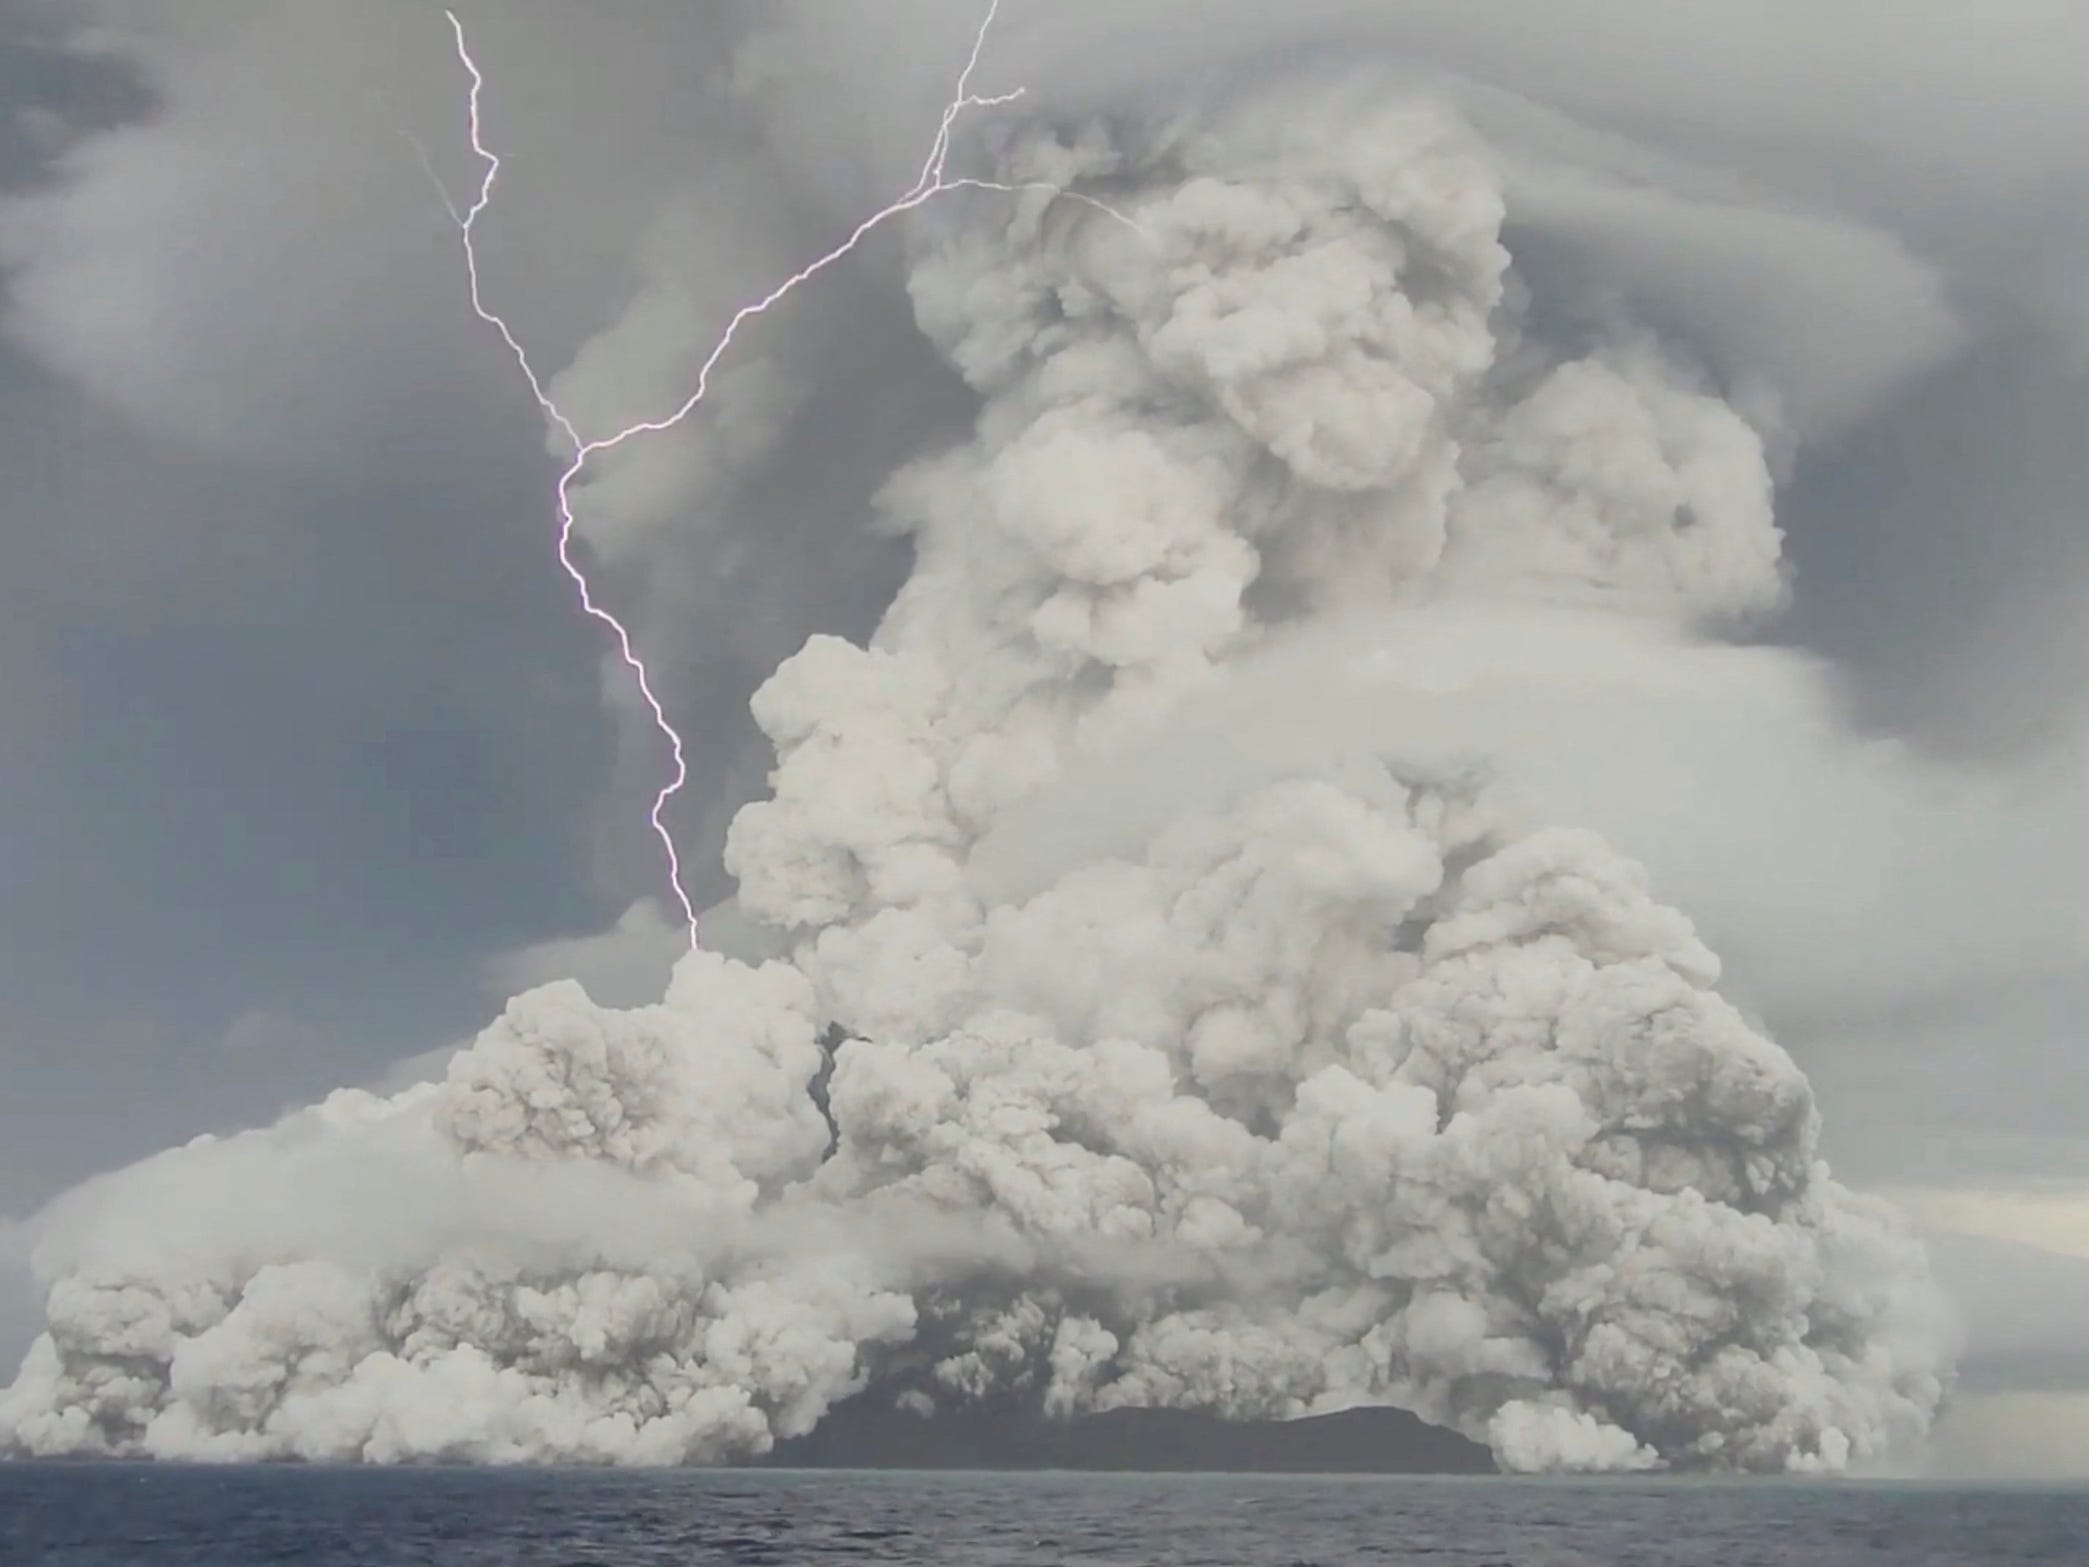 Hunga Tonga-Hunga Ha'apai volcano erupting cloud of ash with lightning strike